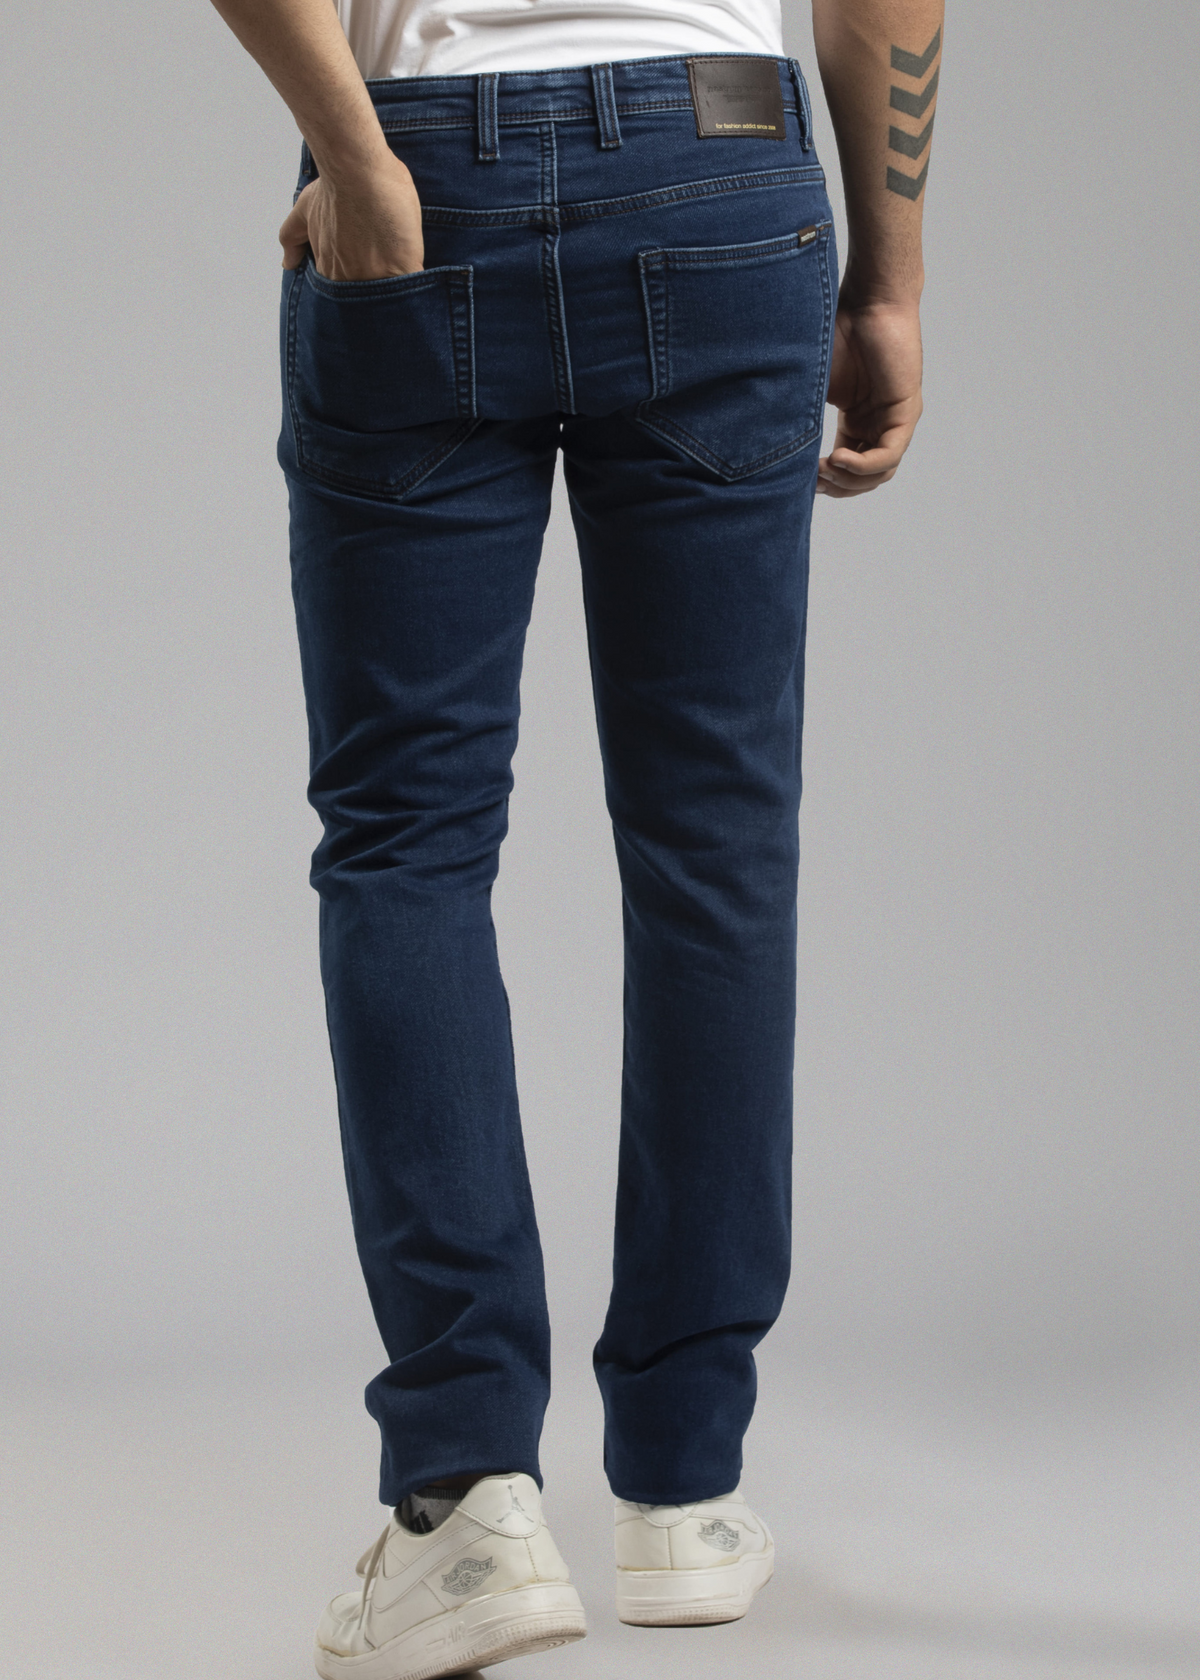 Vegrant Slim Fit Denim Jeans For Men - Nostrum